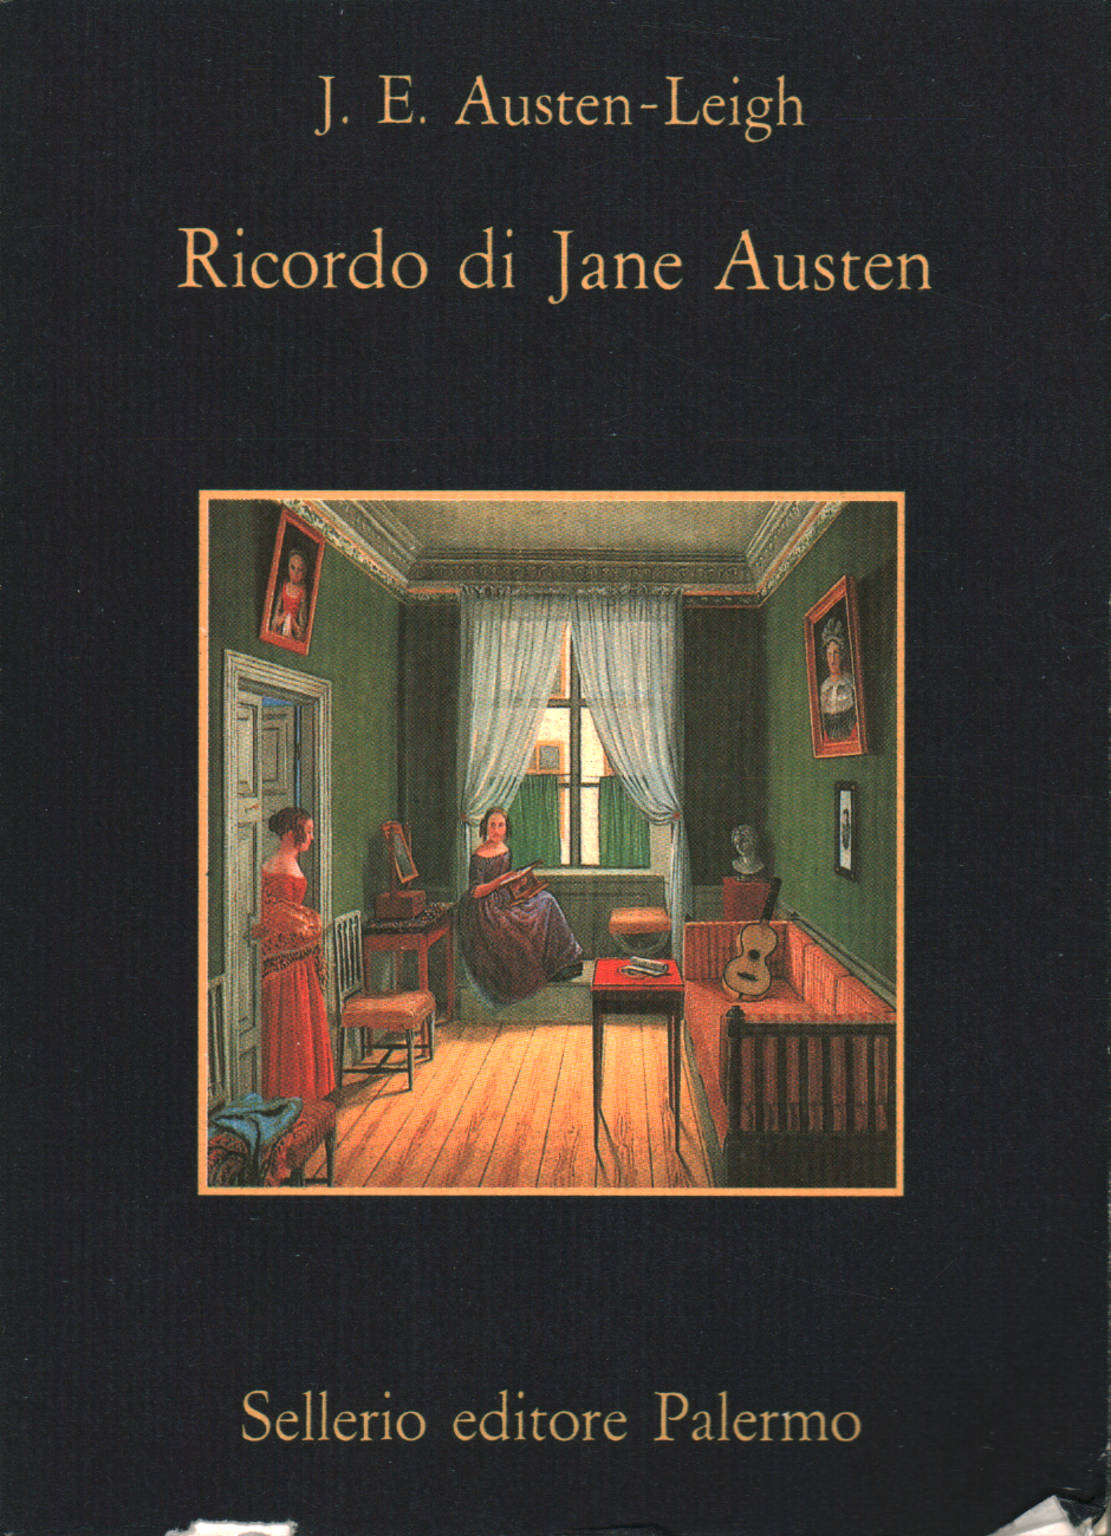 Memory of Jane Austen, J.E. Austen-Leigh